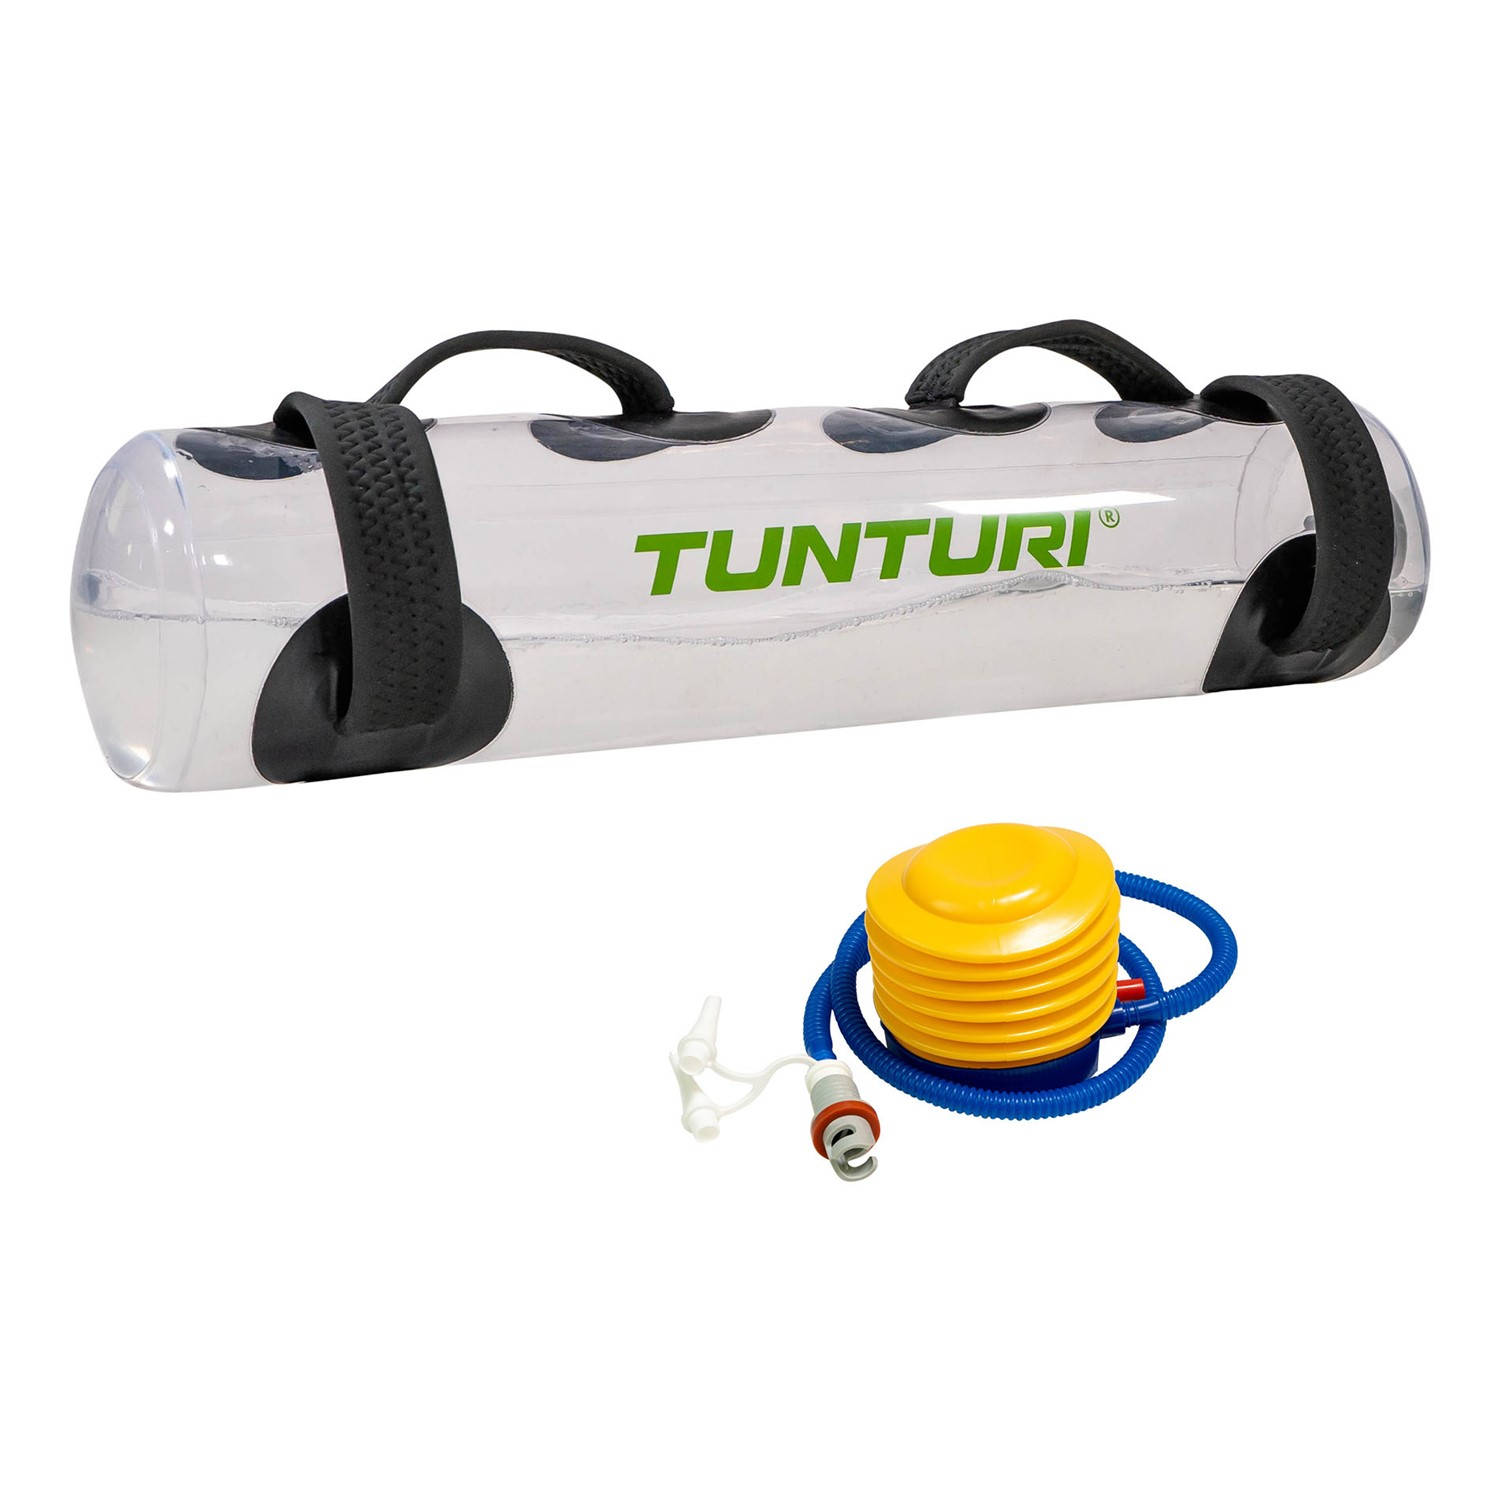 Tunturi Watergevulde Powerbag 20kg - Fitness aquabag voor krachttraining - Zandzak alternatief - Incl. gratis fitness app